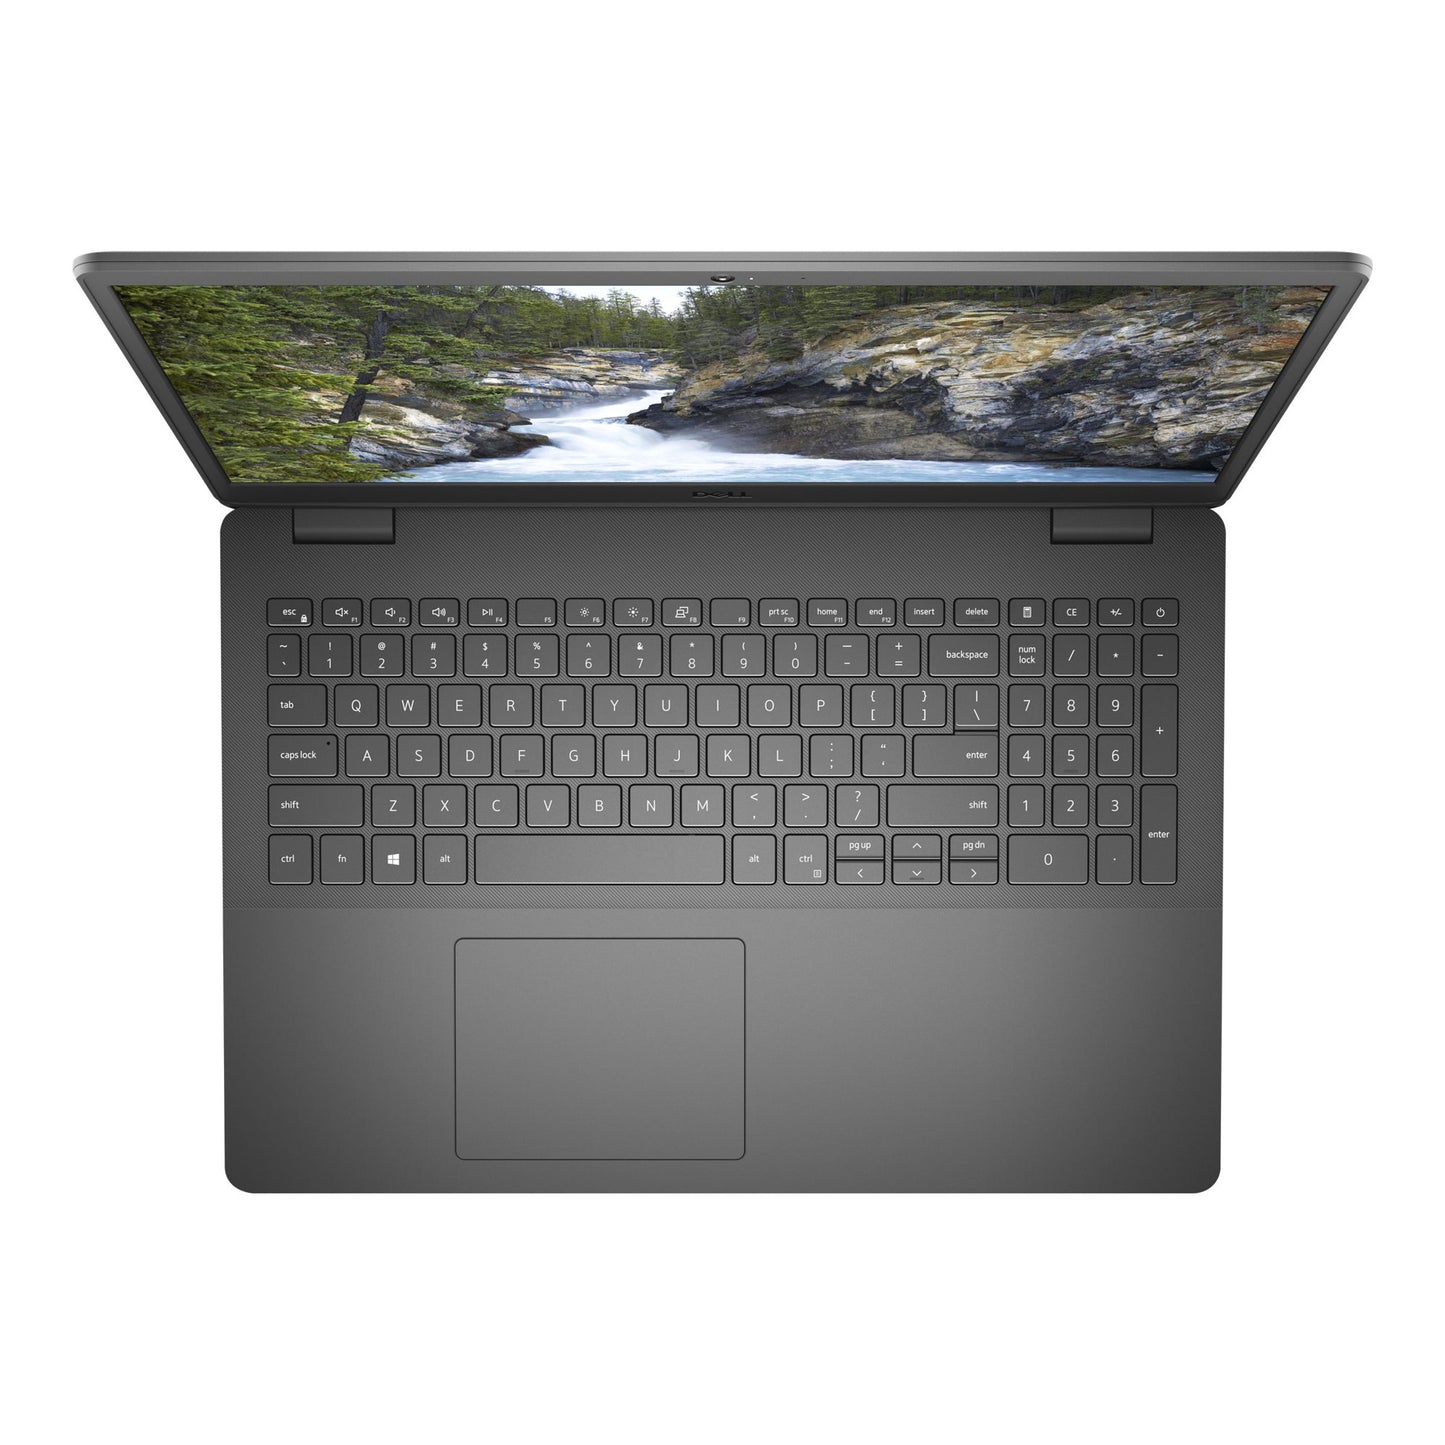 Dell Inspiron 3501 Core i5-1135G7 VGA Iris Xe Laptop Offers (New OB)